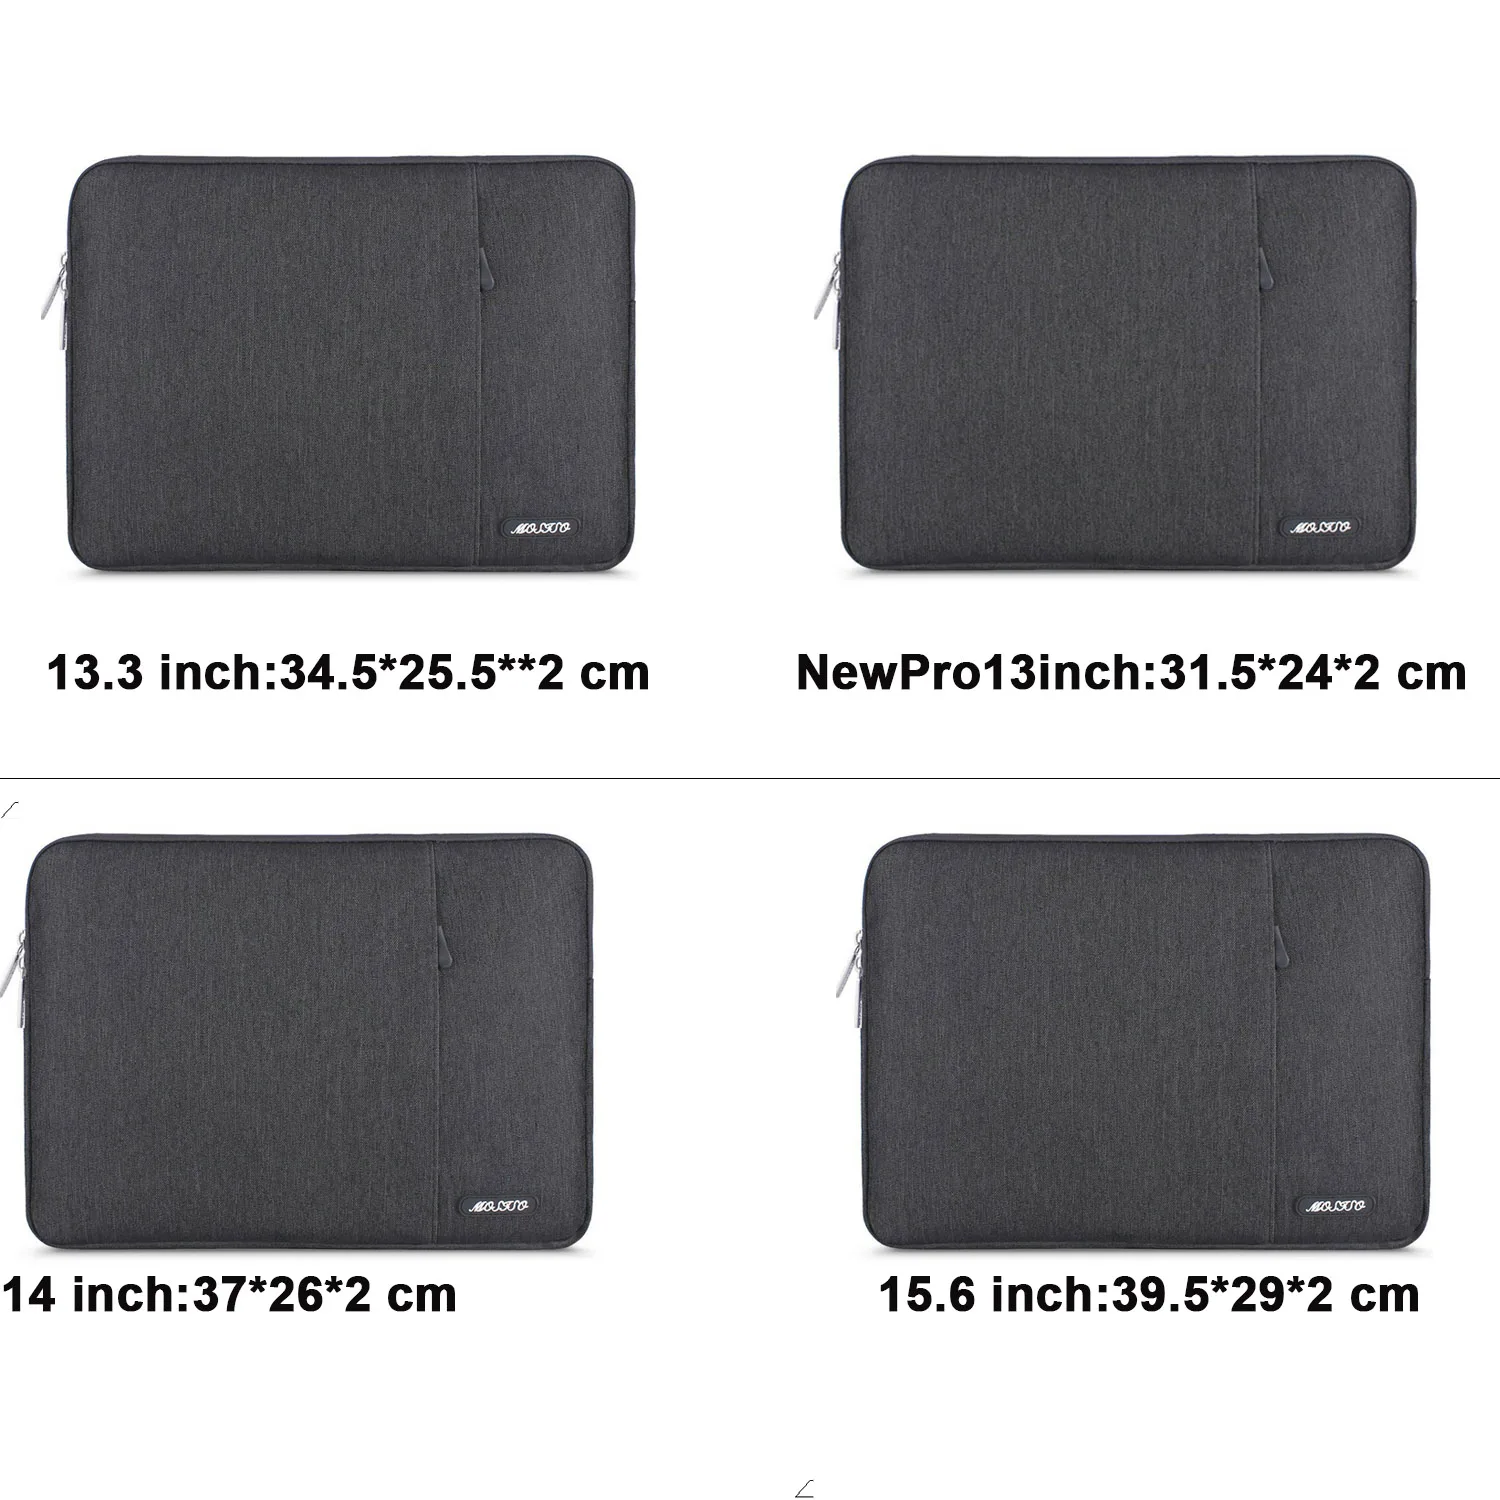 MOSISO сумка для ноутбука чехол сумка 10,5 11,12, 13,14, 1", 15,6", 17 дюймов Тетрадь сумка для ноутбука MacBook Air Pro 13 15 дюймов Asus acer Dell